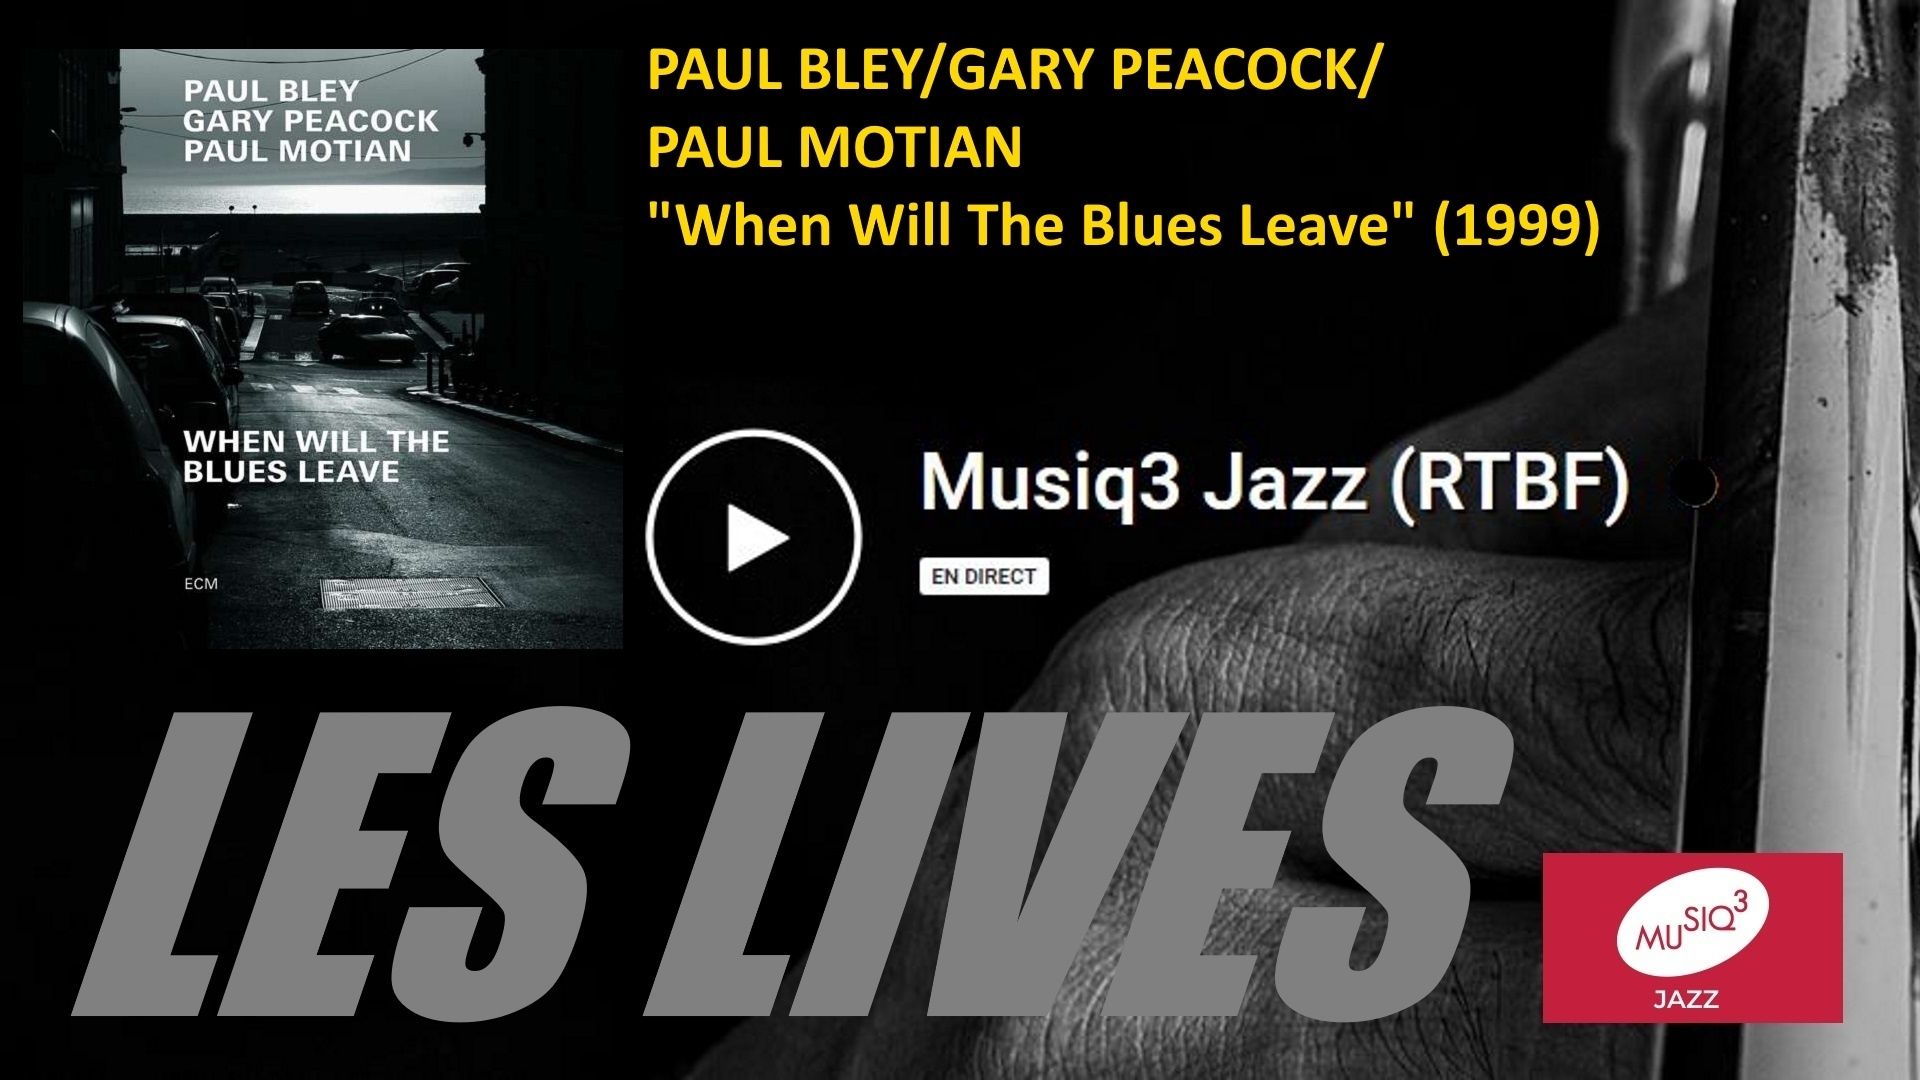 Les lives de Musiq3 Jazz : Paul Bley/Gary Peacock/Paul Motian ("When Will The Blues Leave", 1999)